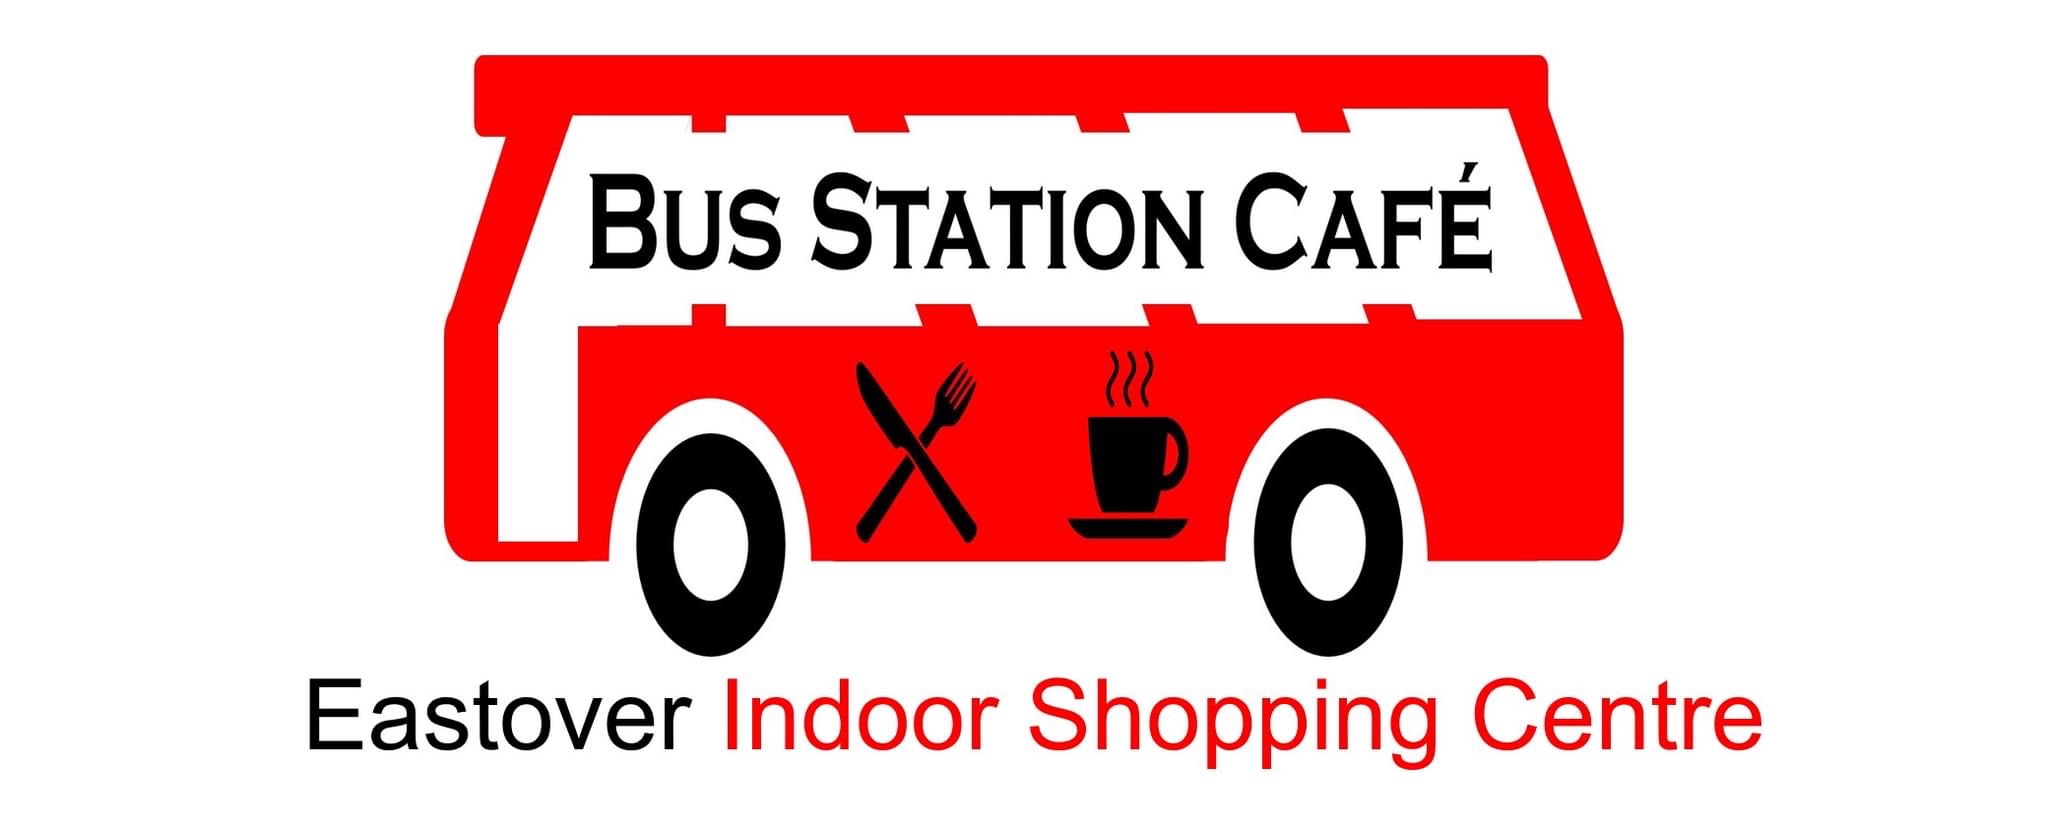 Bus Station Cafe Bus Logo